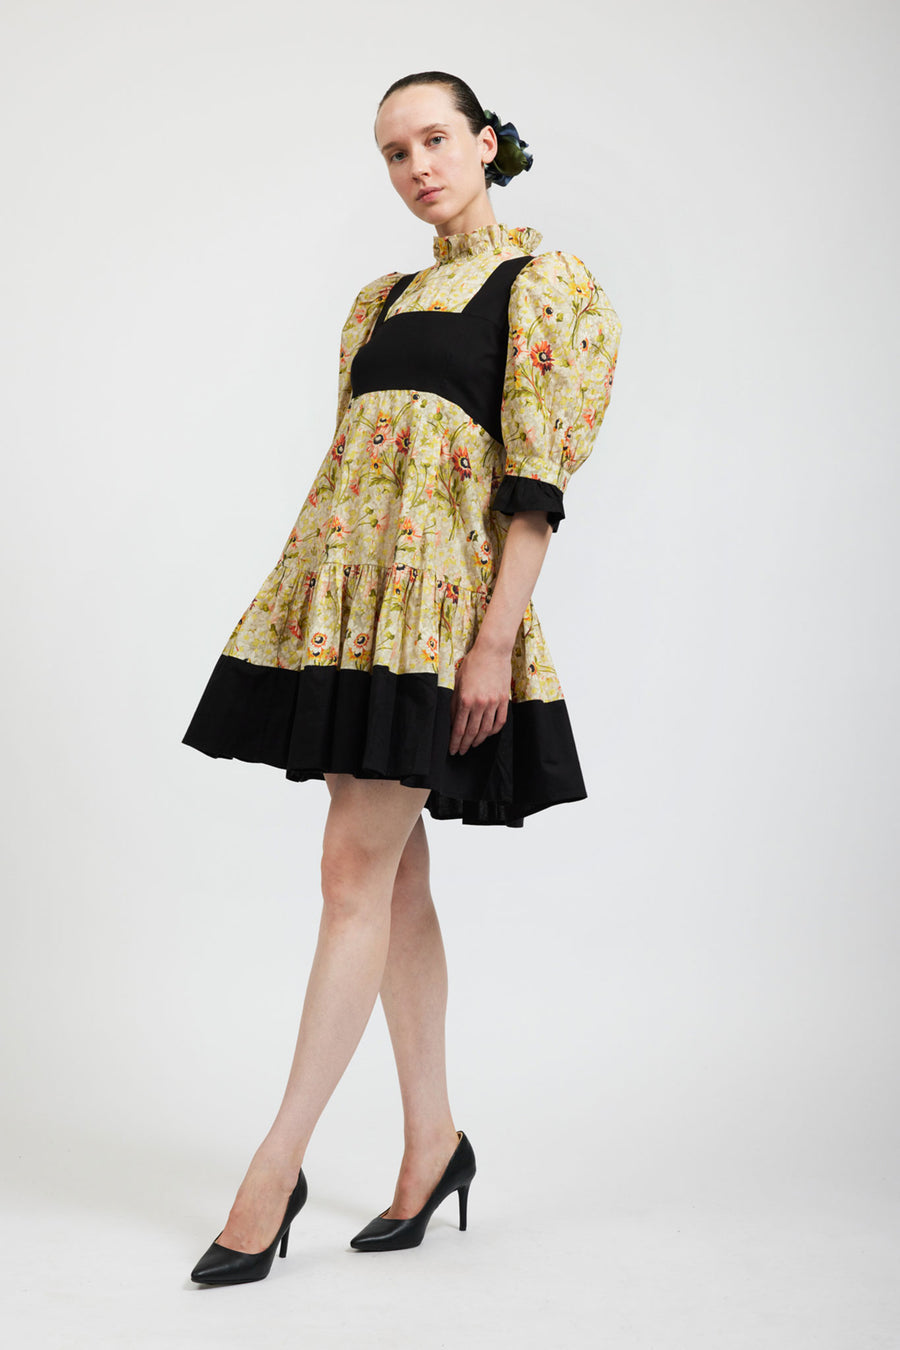 BATSHEVA - Laura Ashley x BATSHEVA Mini Ruthin Dress in Witton Floral